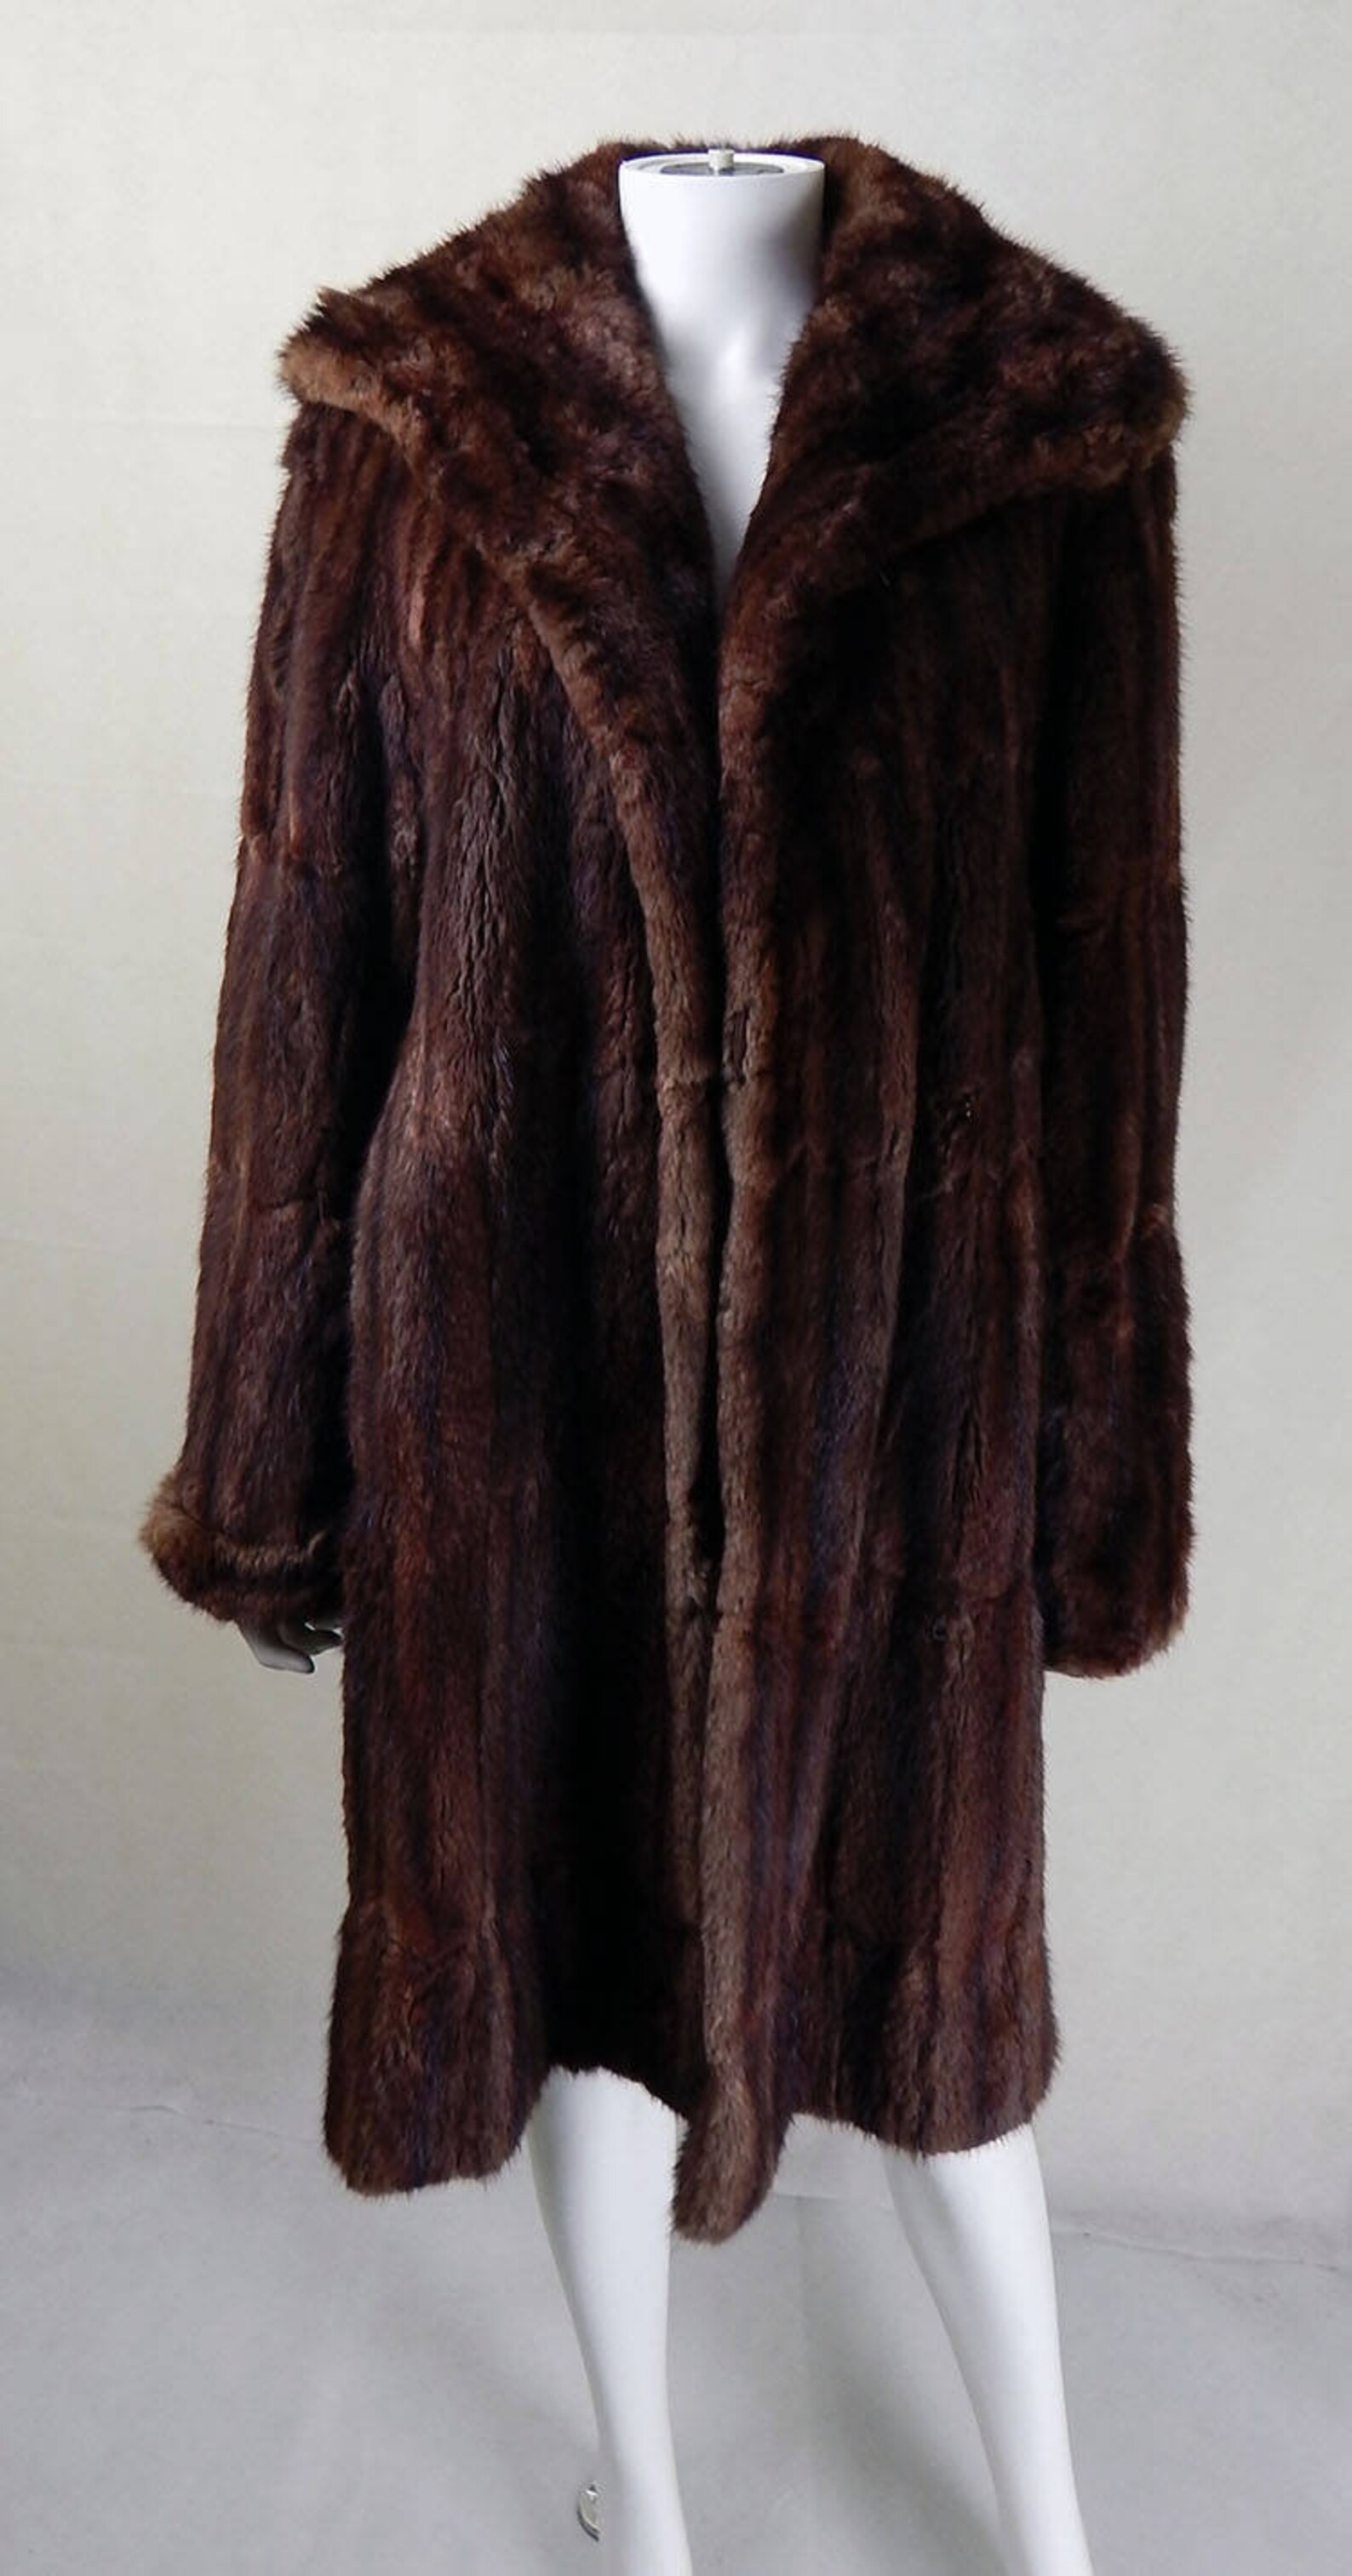 Vintage Mink Fur Coat Amazing Original 1940s Mink Fur Coat - Etsy